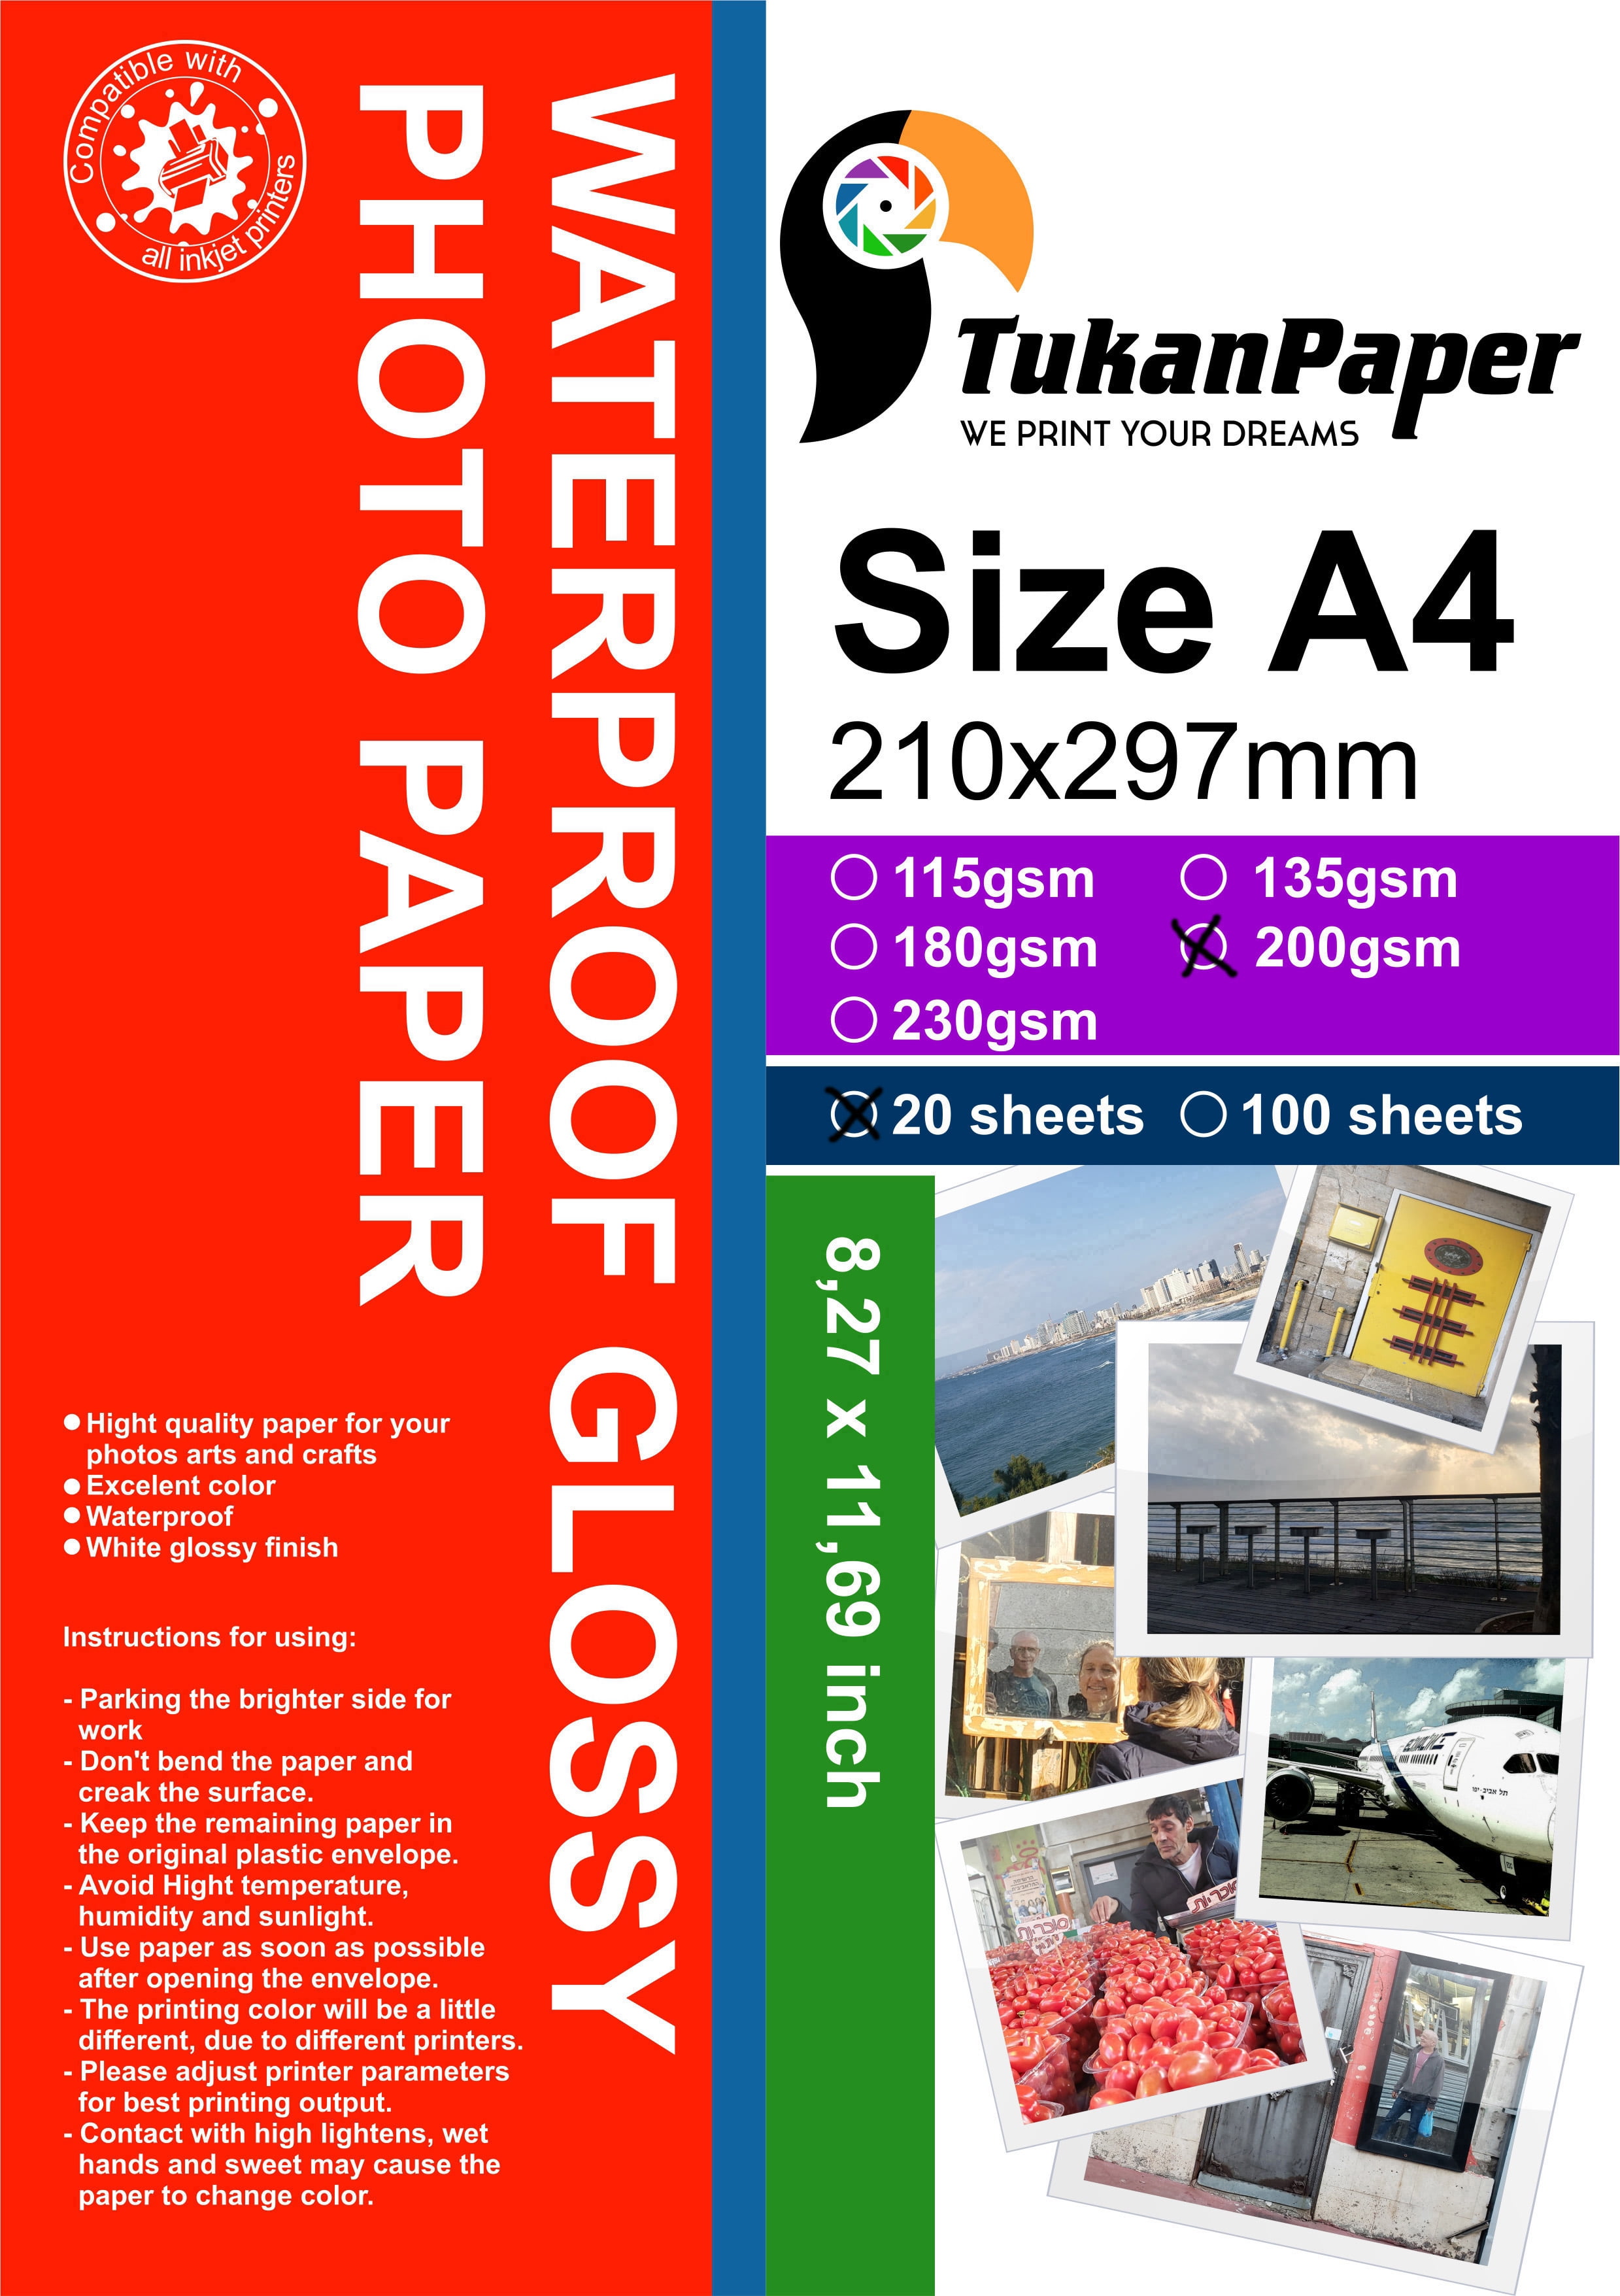 HAM163110 - Color Laser Gloss Paper (Pack of 5)